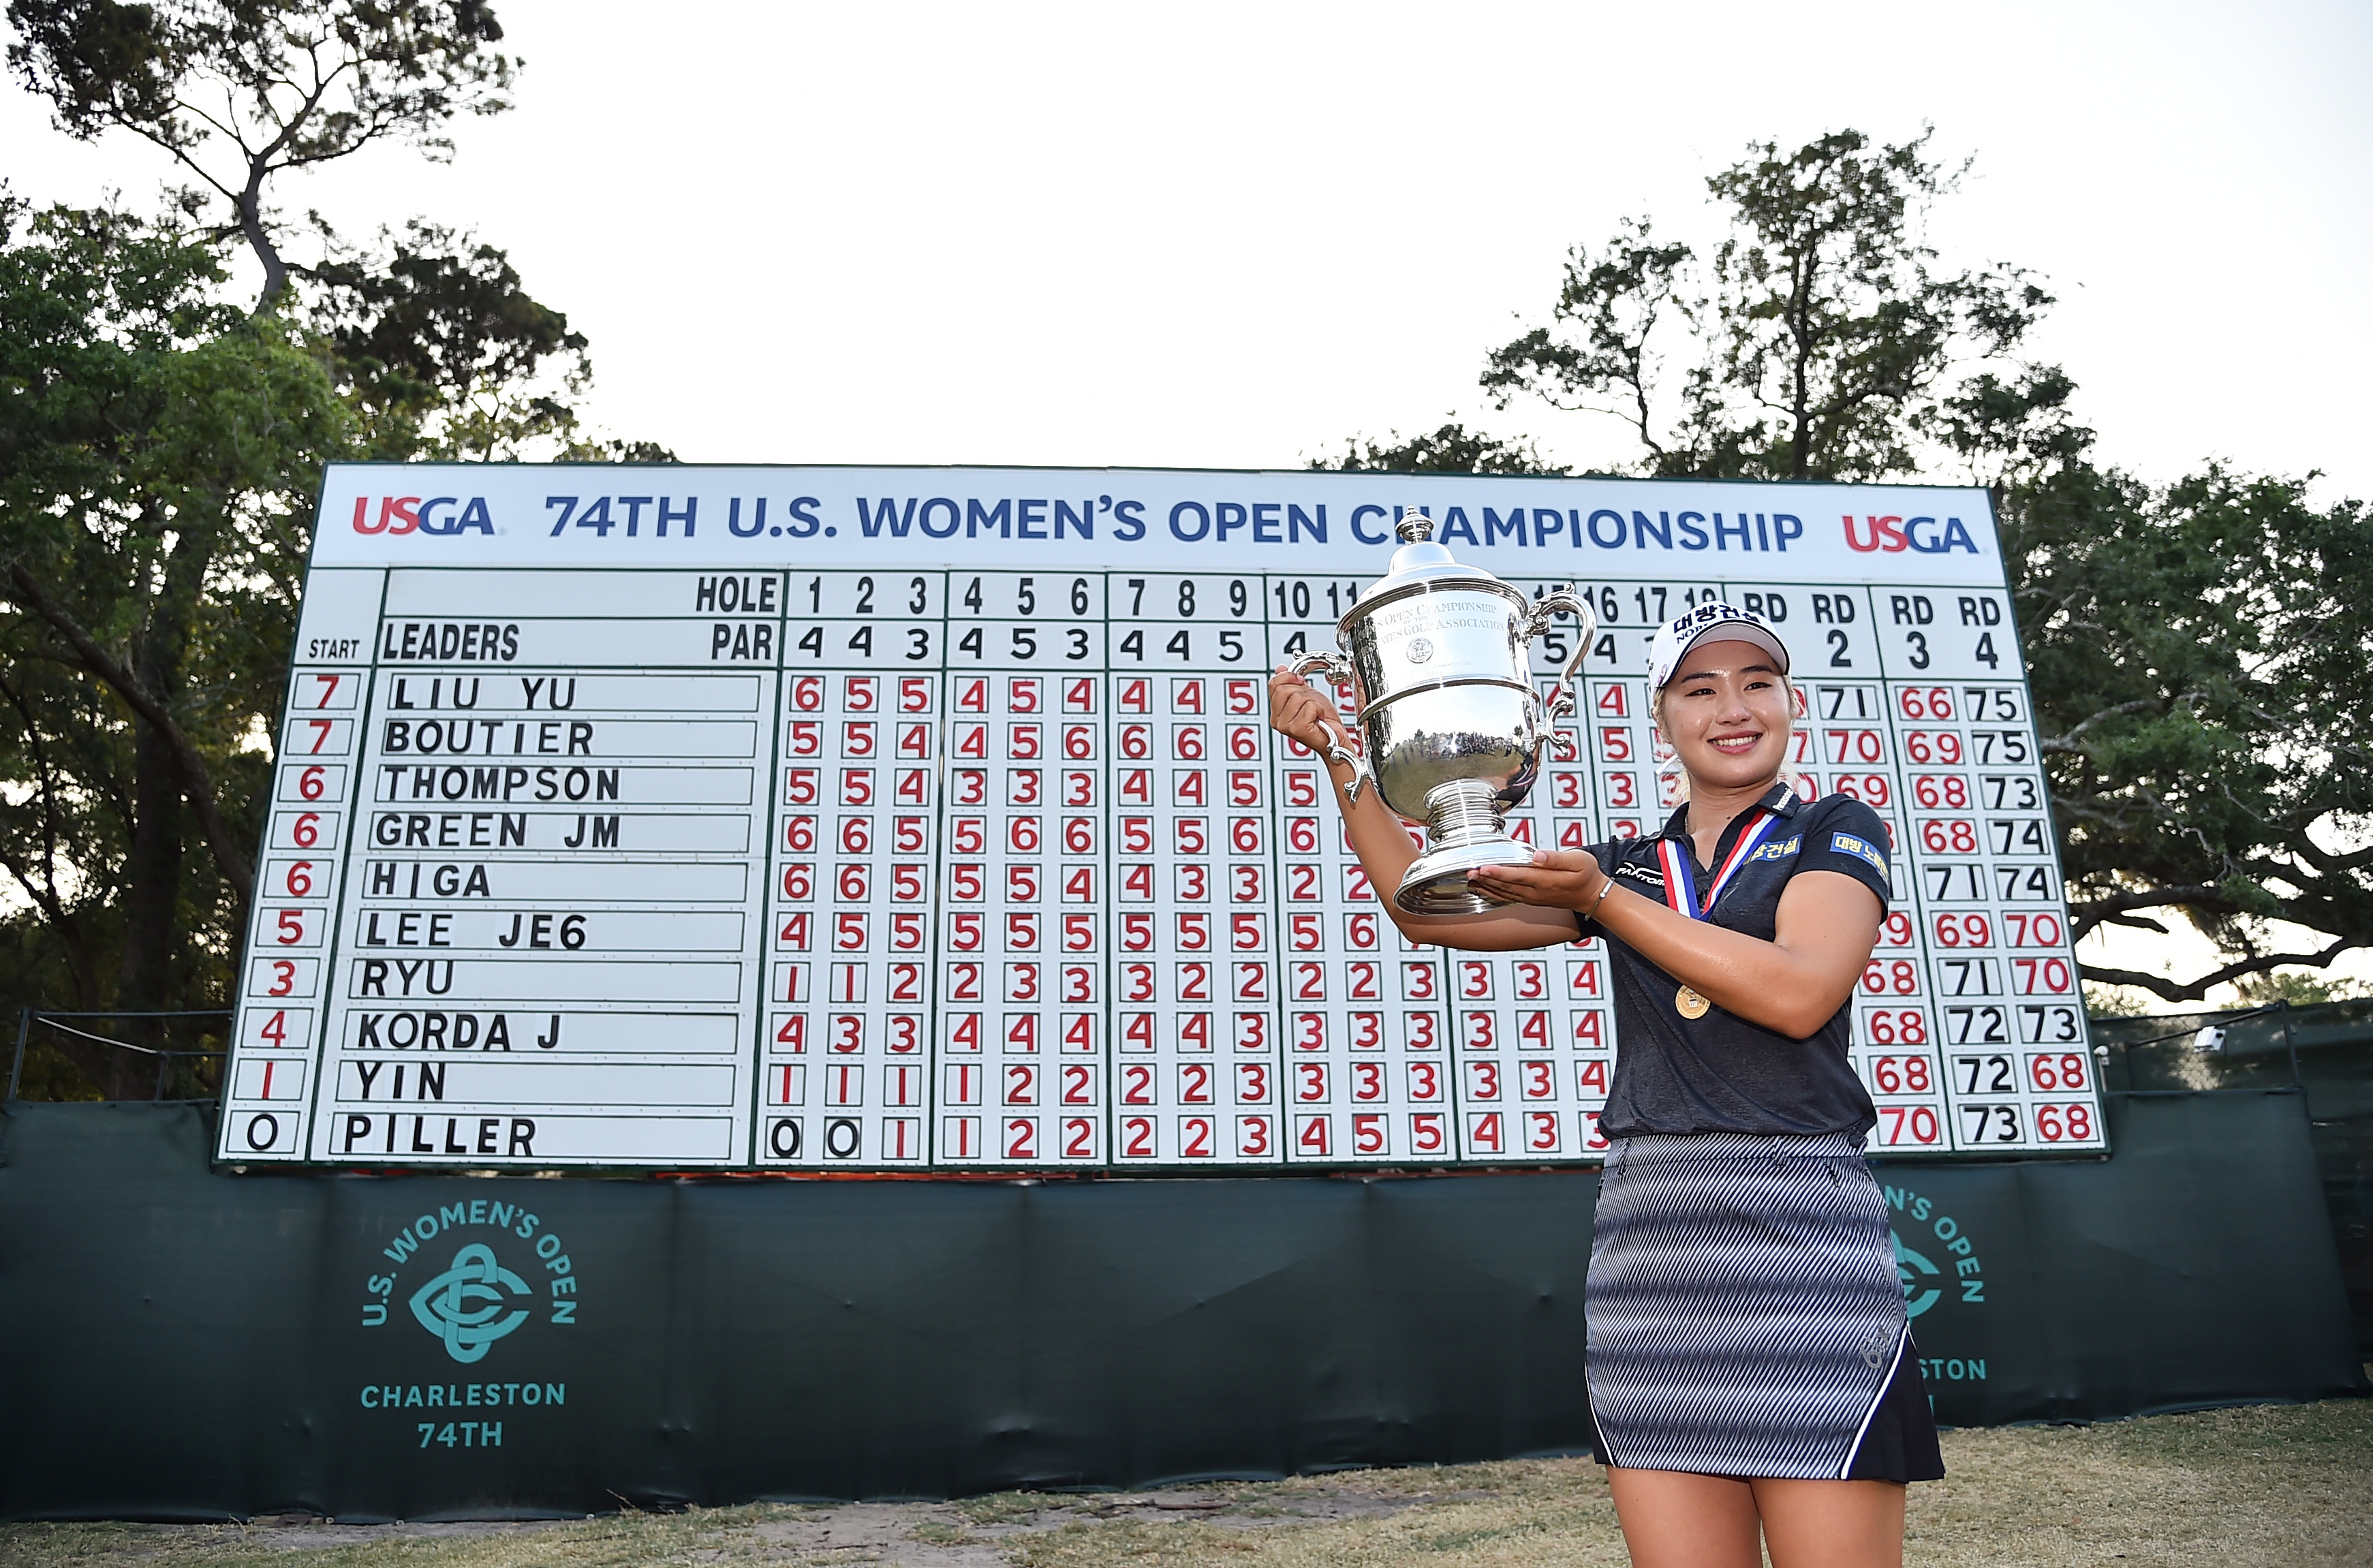 Jeongeun Lee6 surges to capture U.S. Women’s Open championship